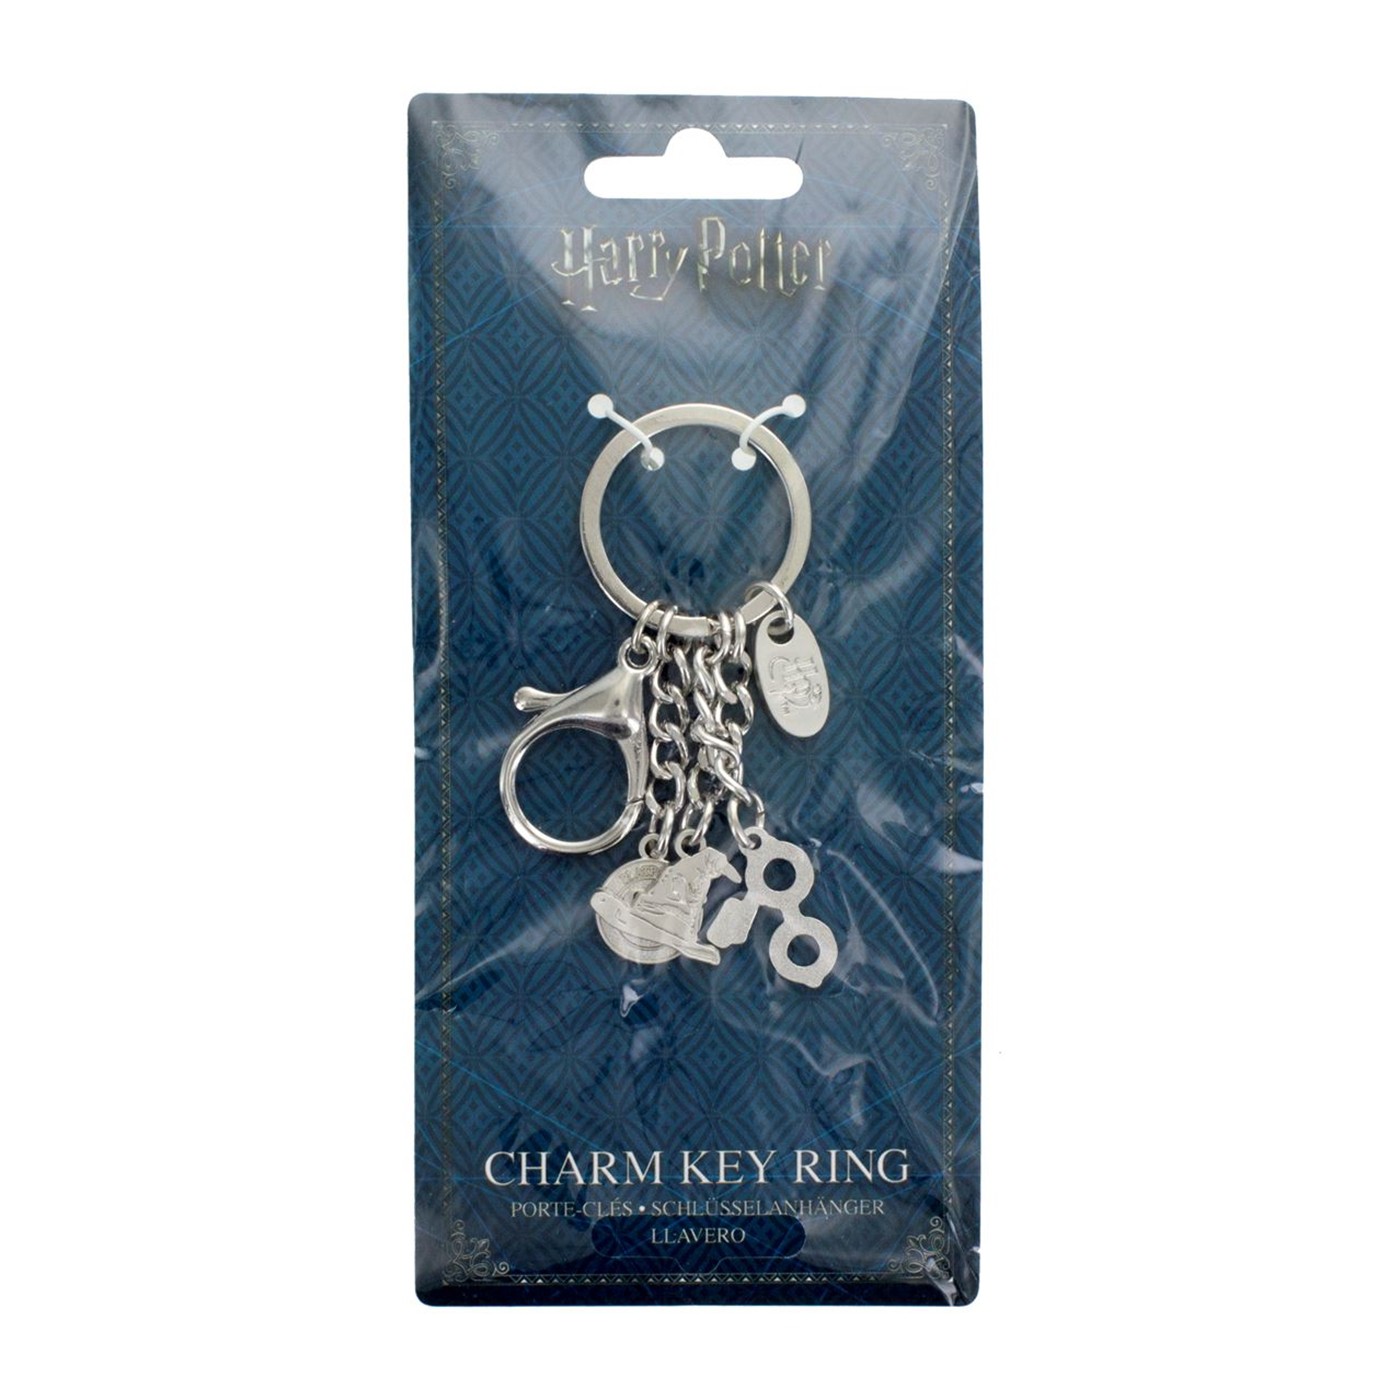 Harry Potter Charm Keychain